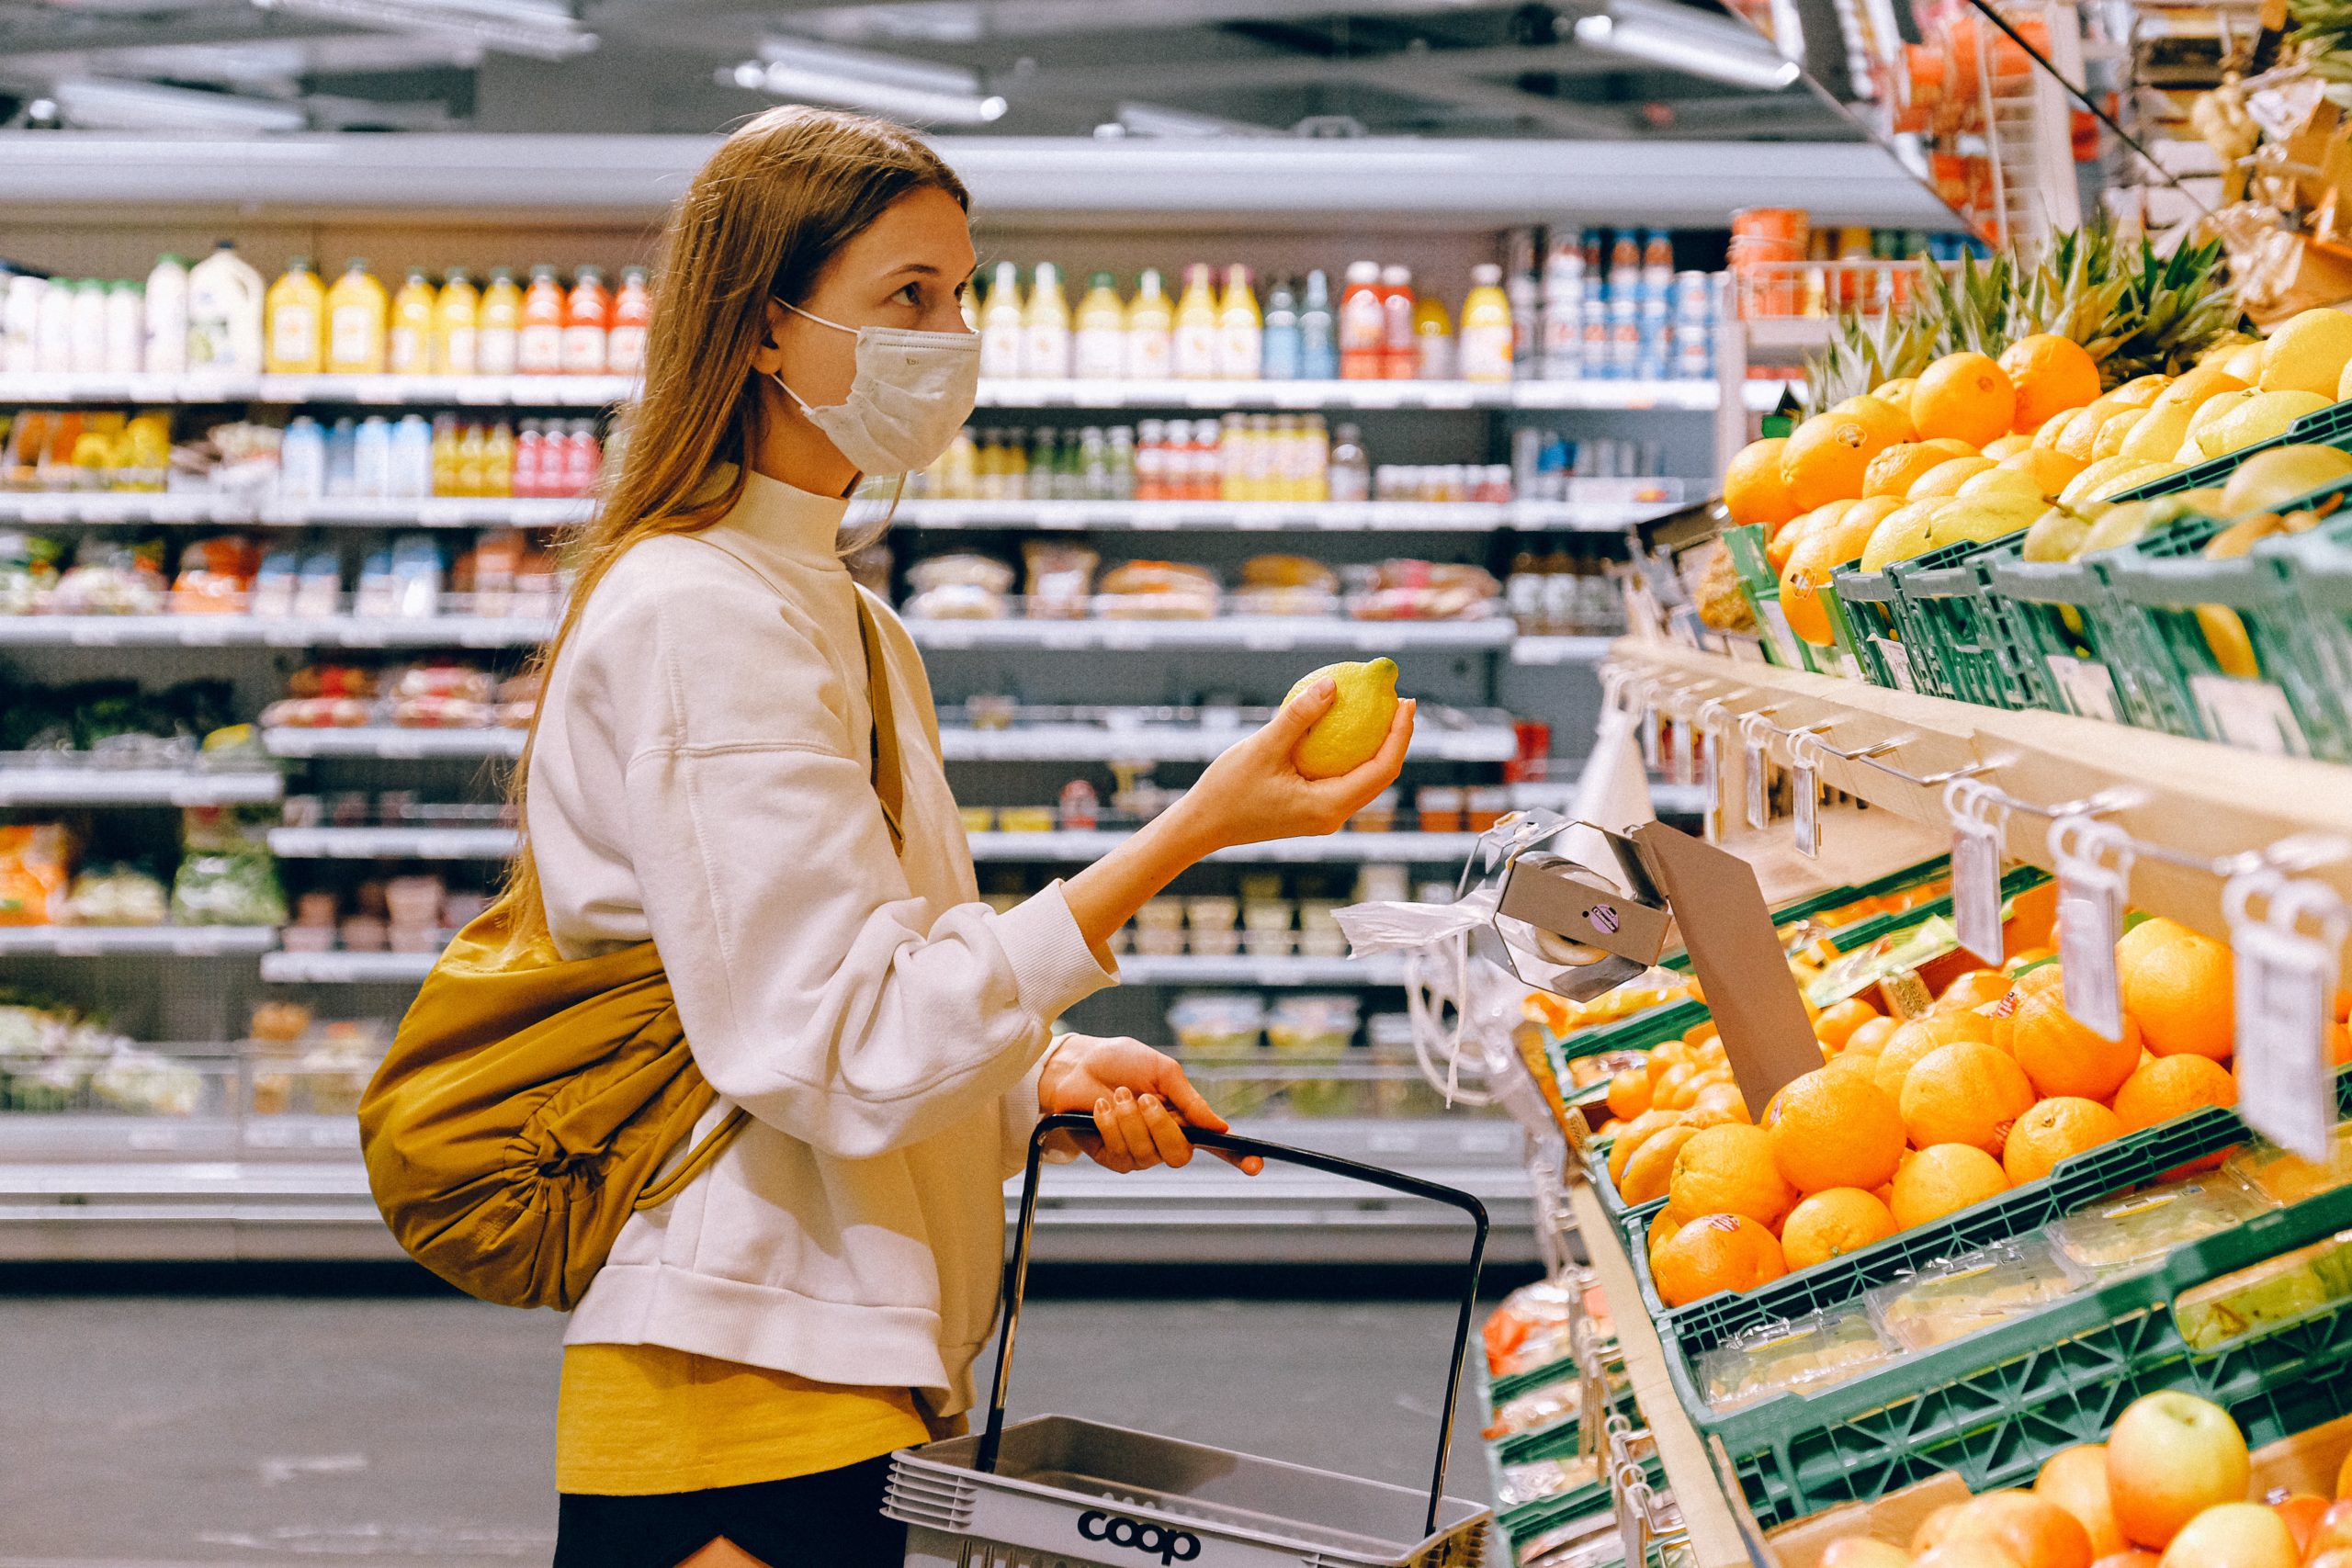 Covid 19 - Women in a supermarket